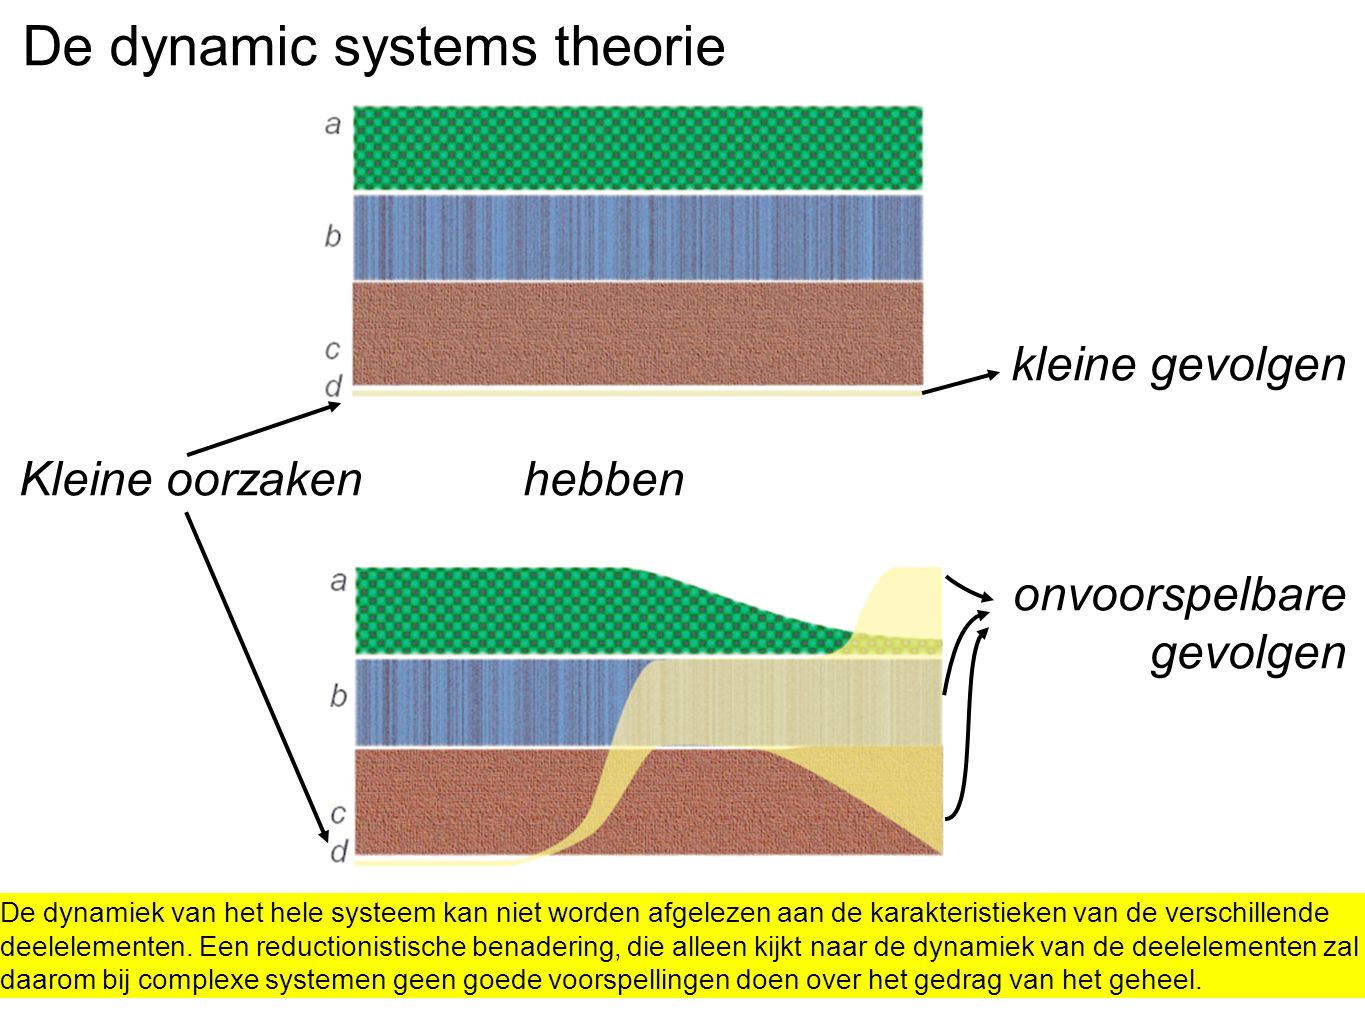 De dynamic systems theorie